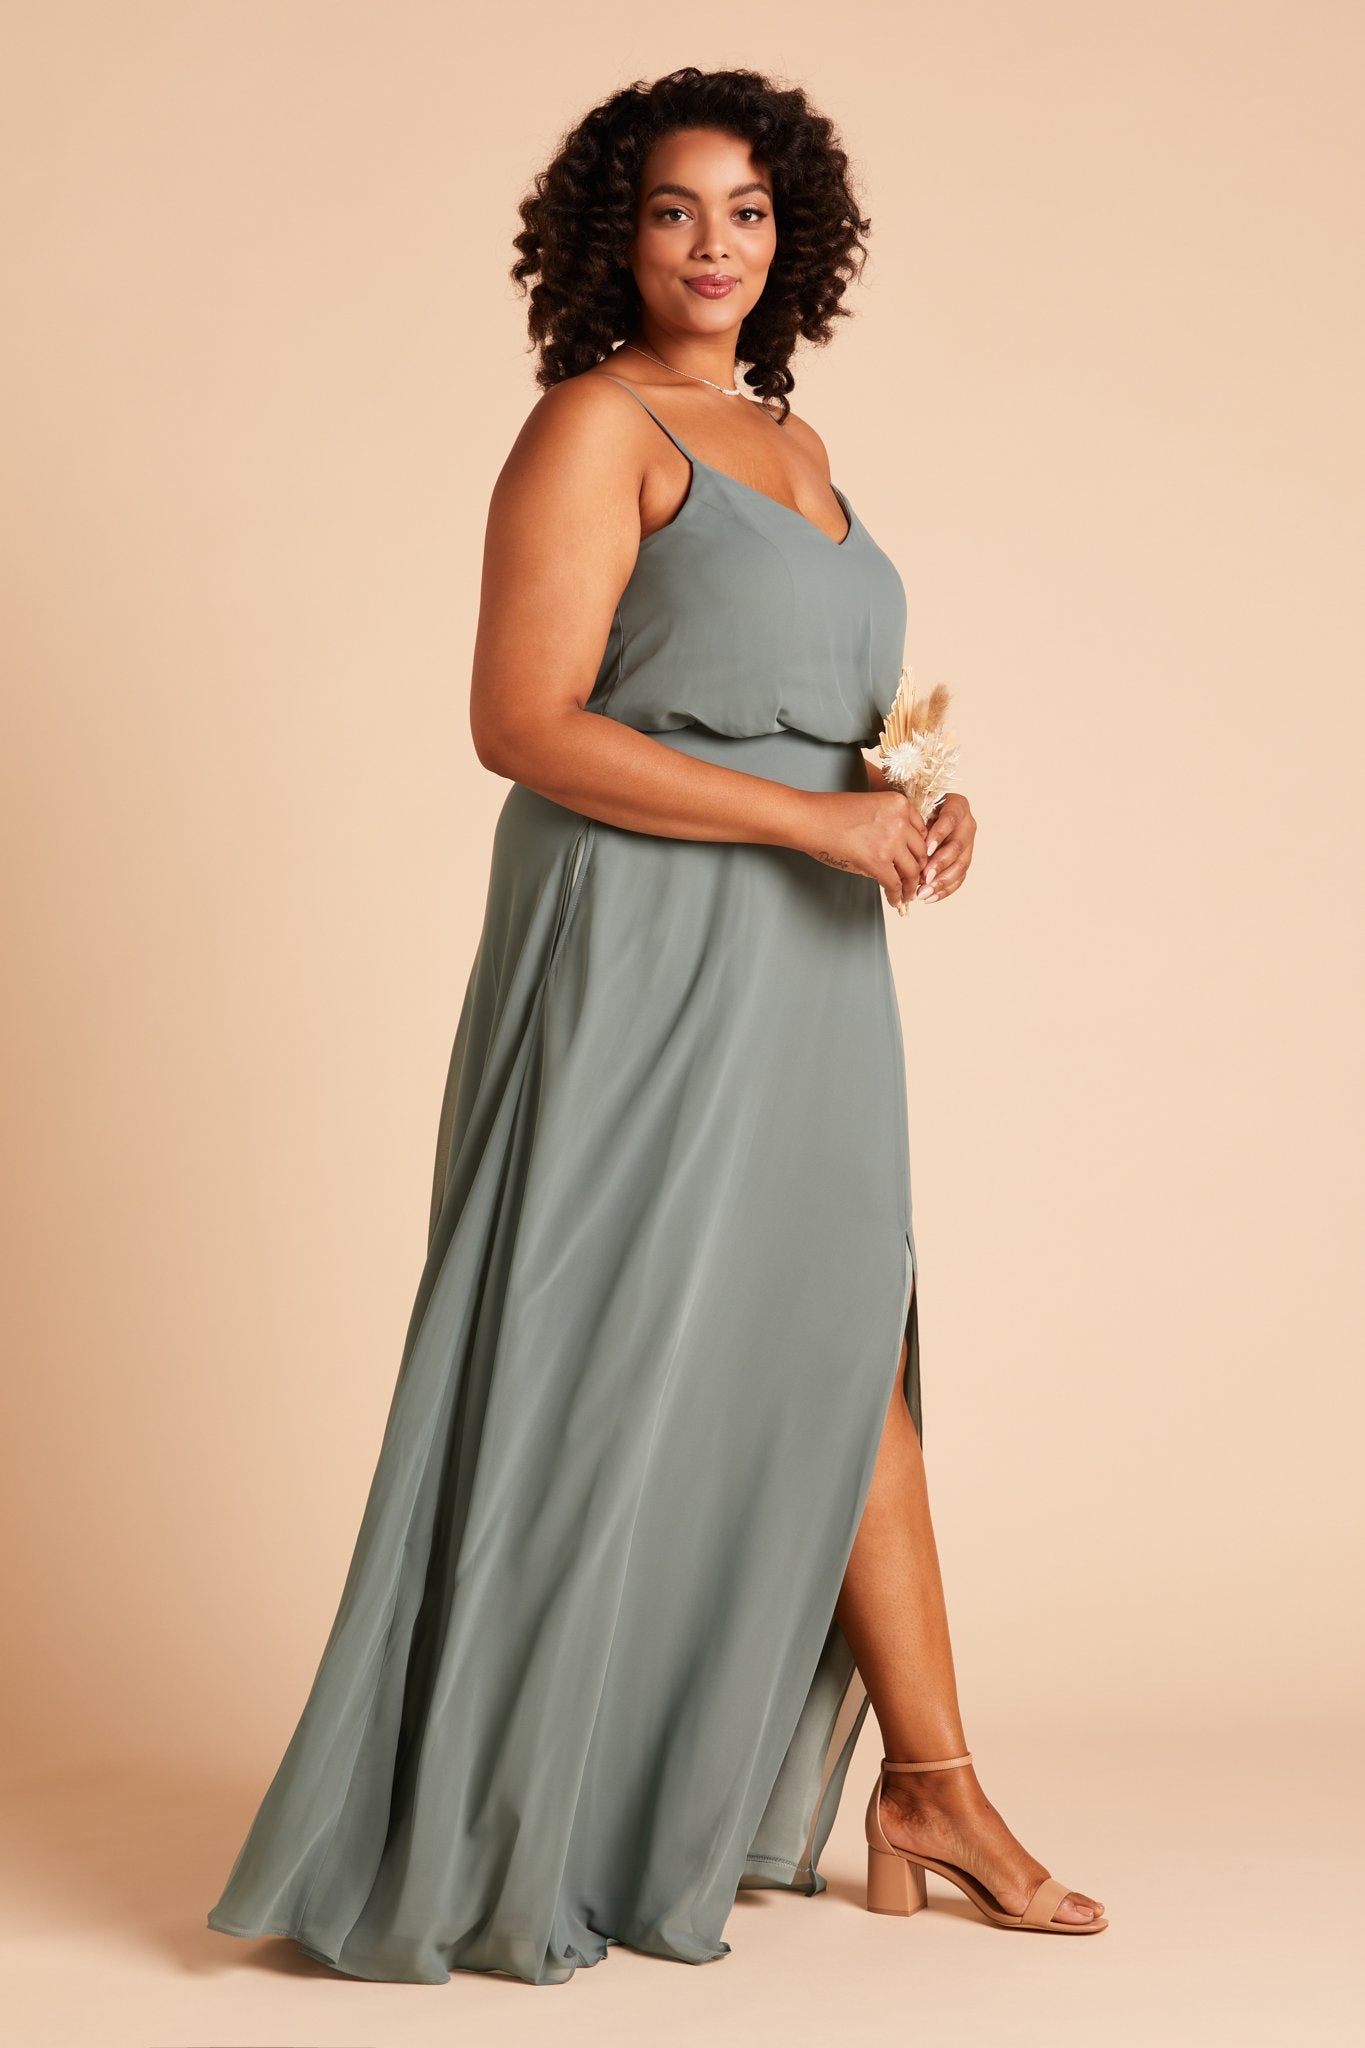 Gwennie plus size bridesmaid dress with slit in sea glass green chiffon by Birdy Grey, side view